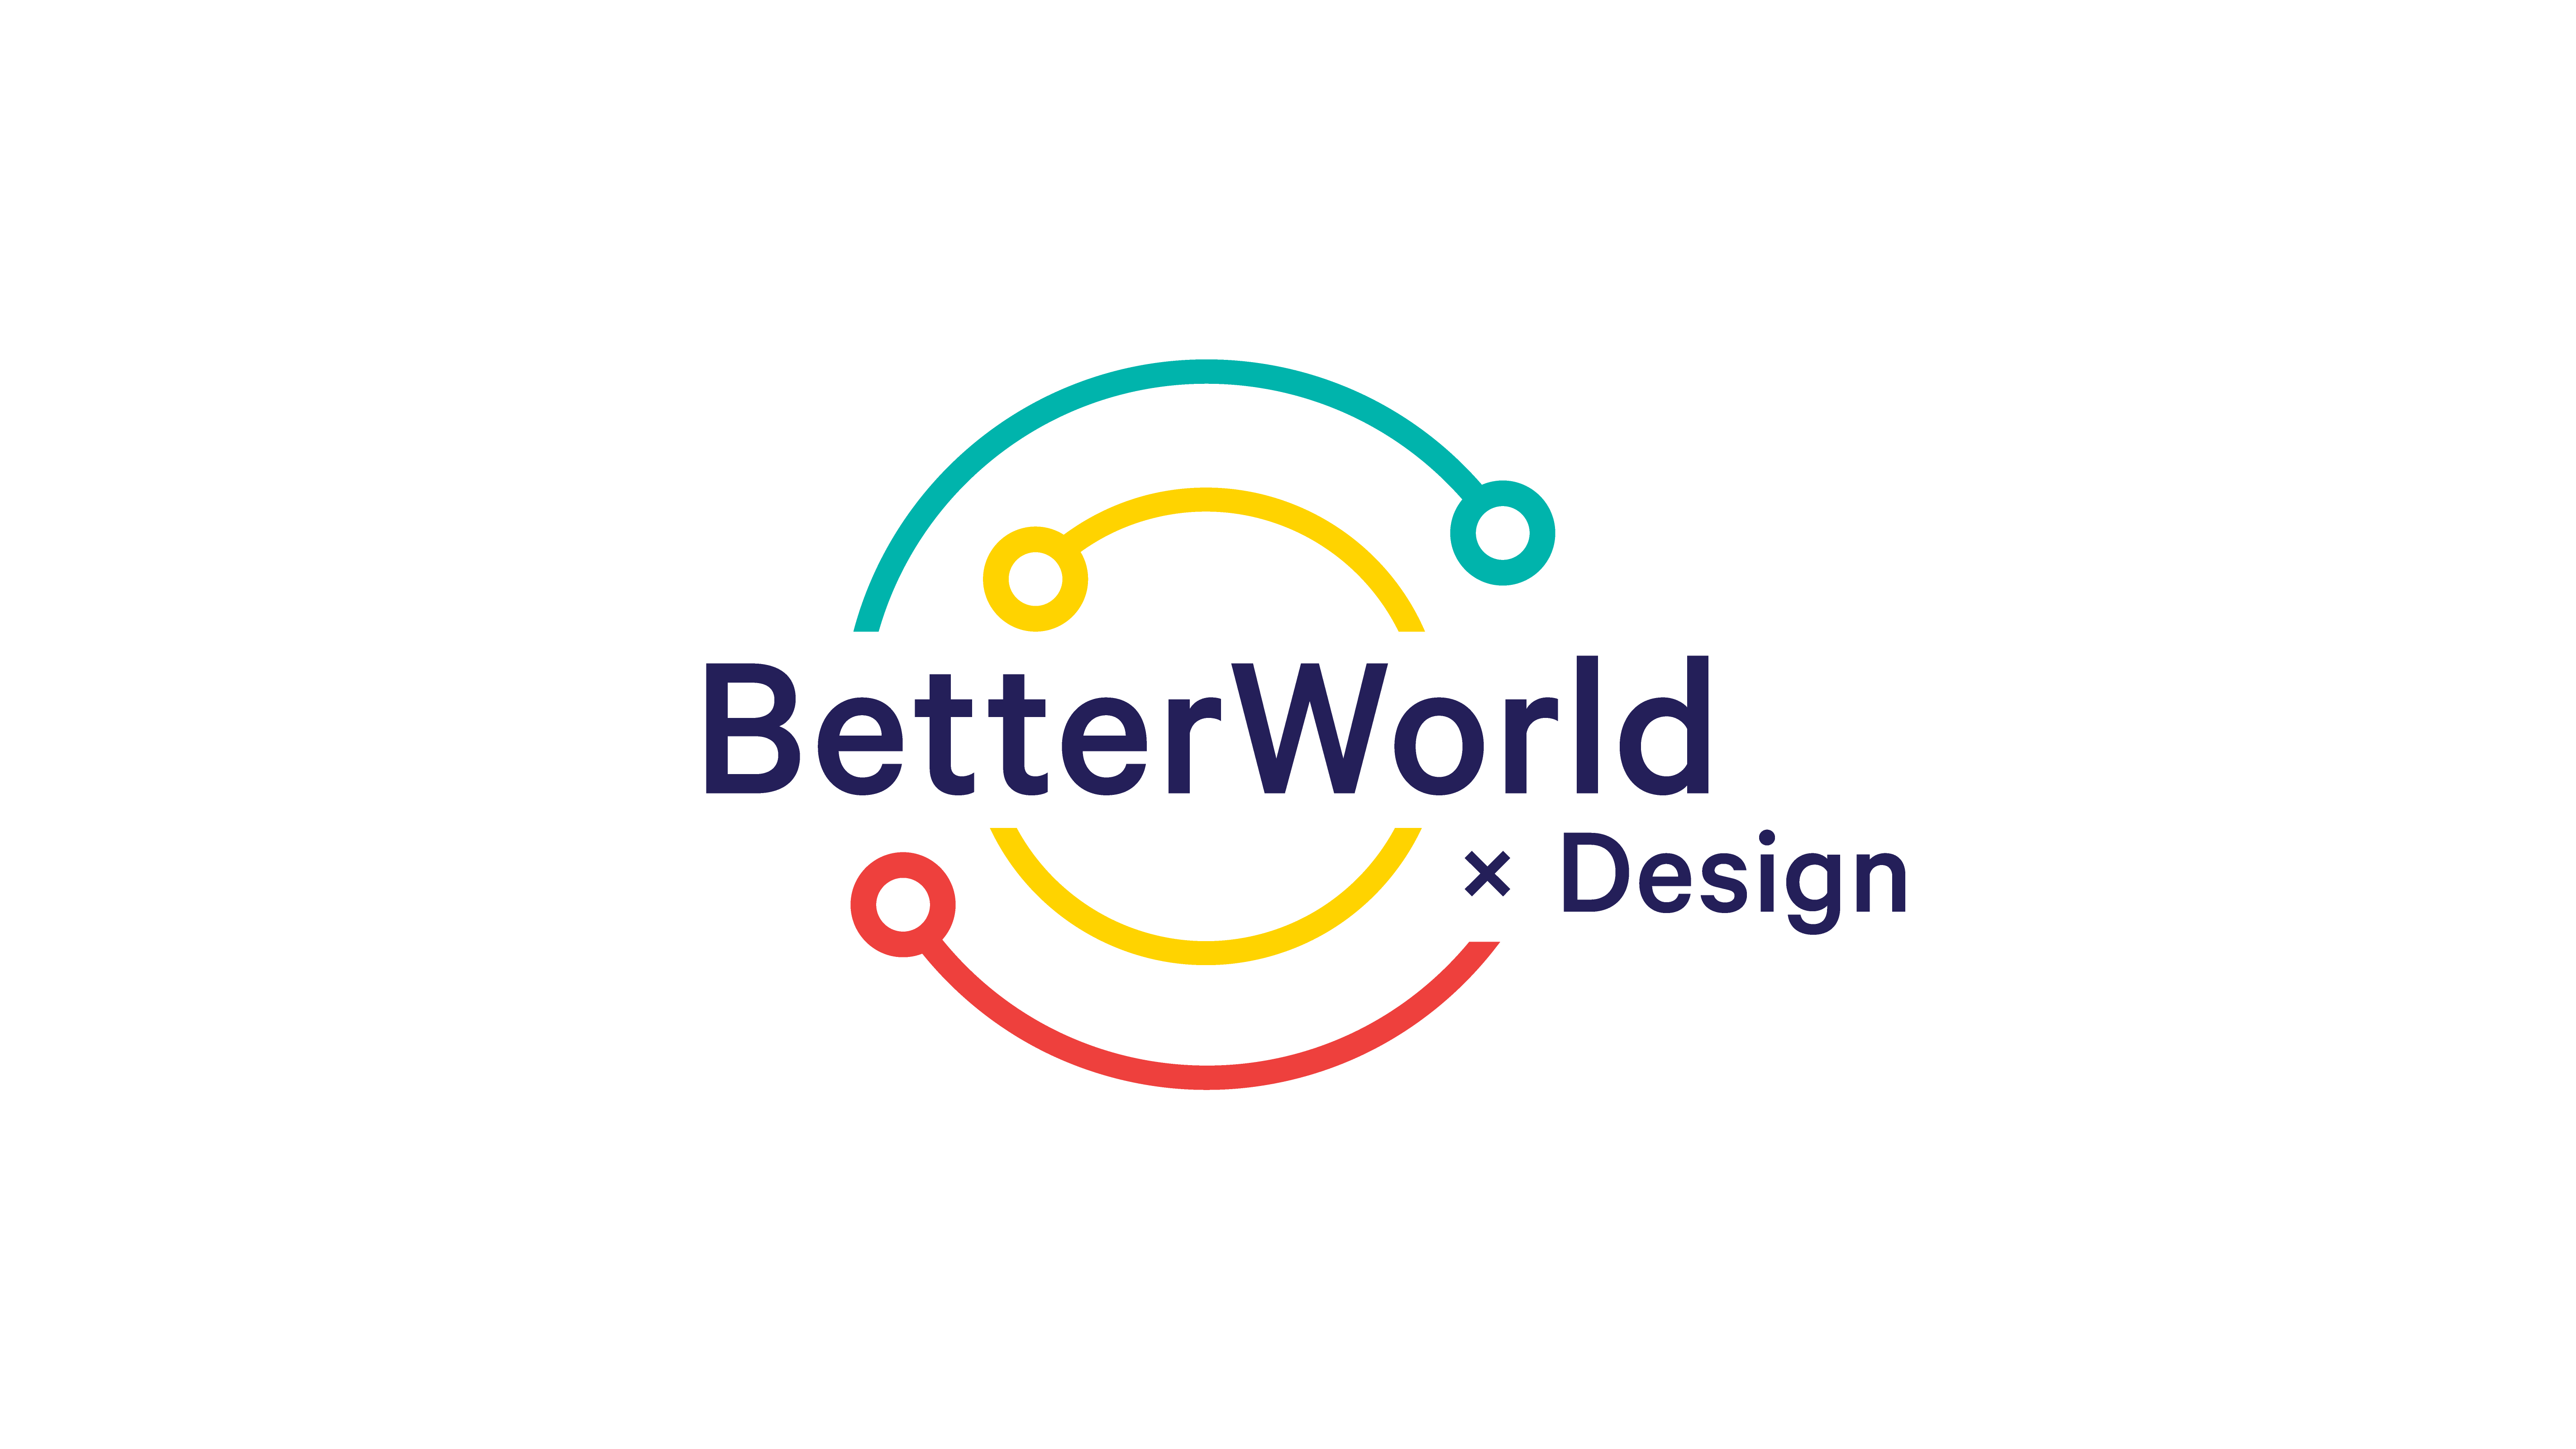 Betterworldbydesign